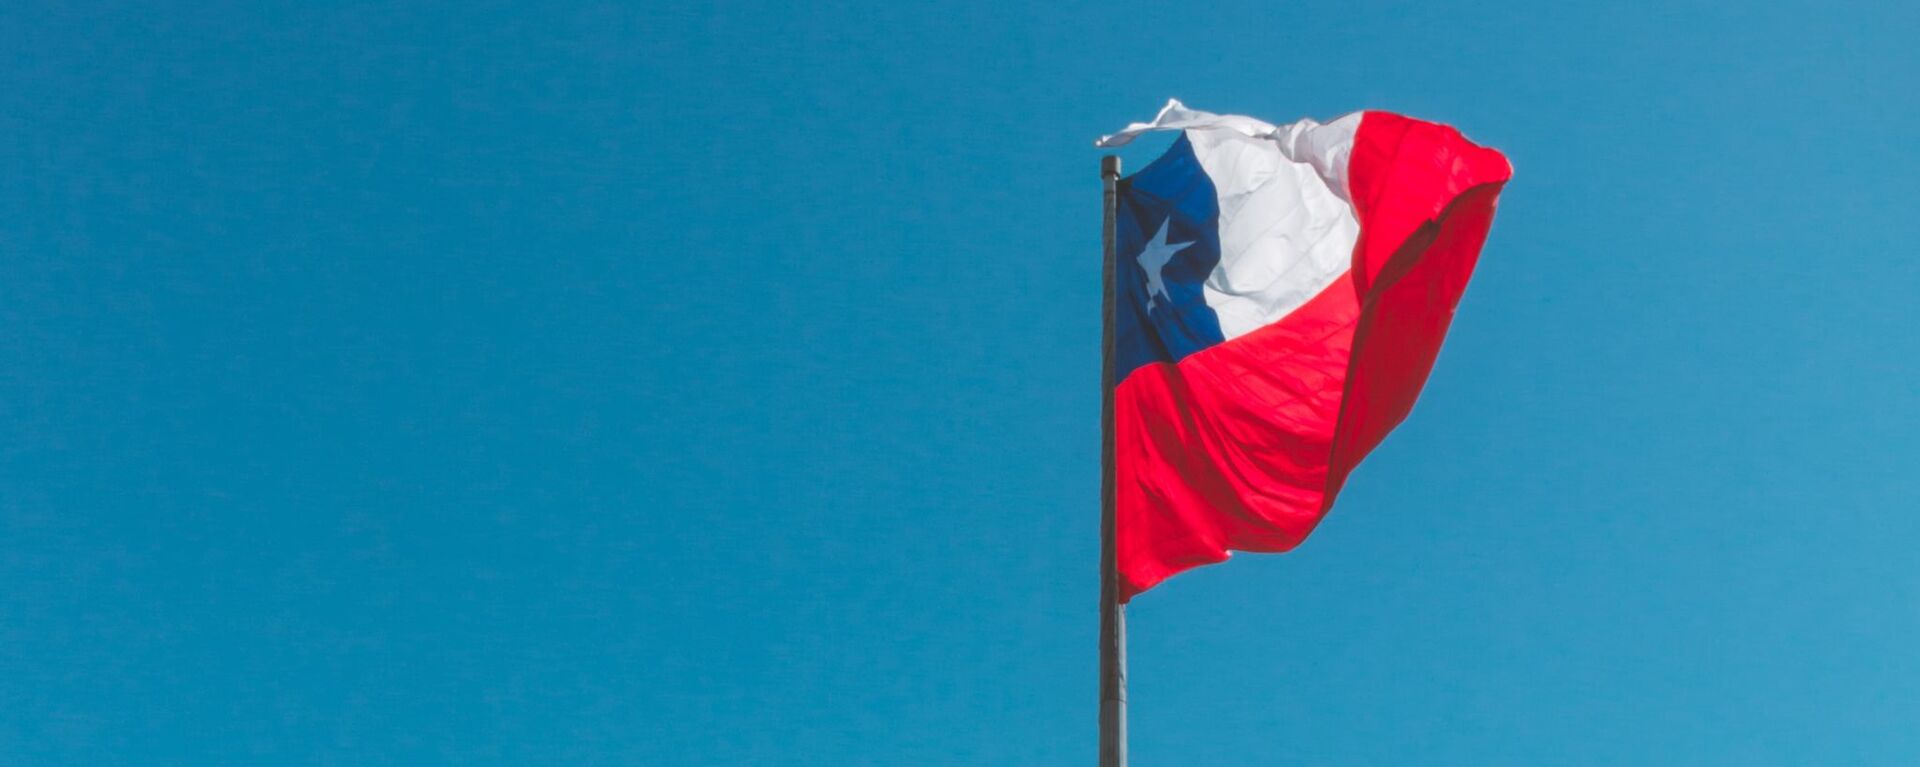 La bandera de Chile - Sputnik Mundo, 1920, 28.04.2021